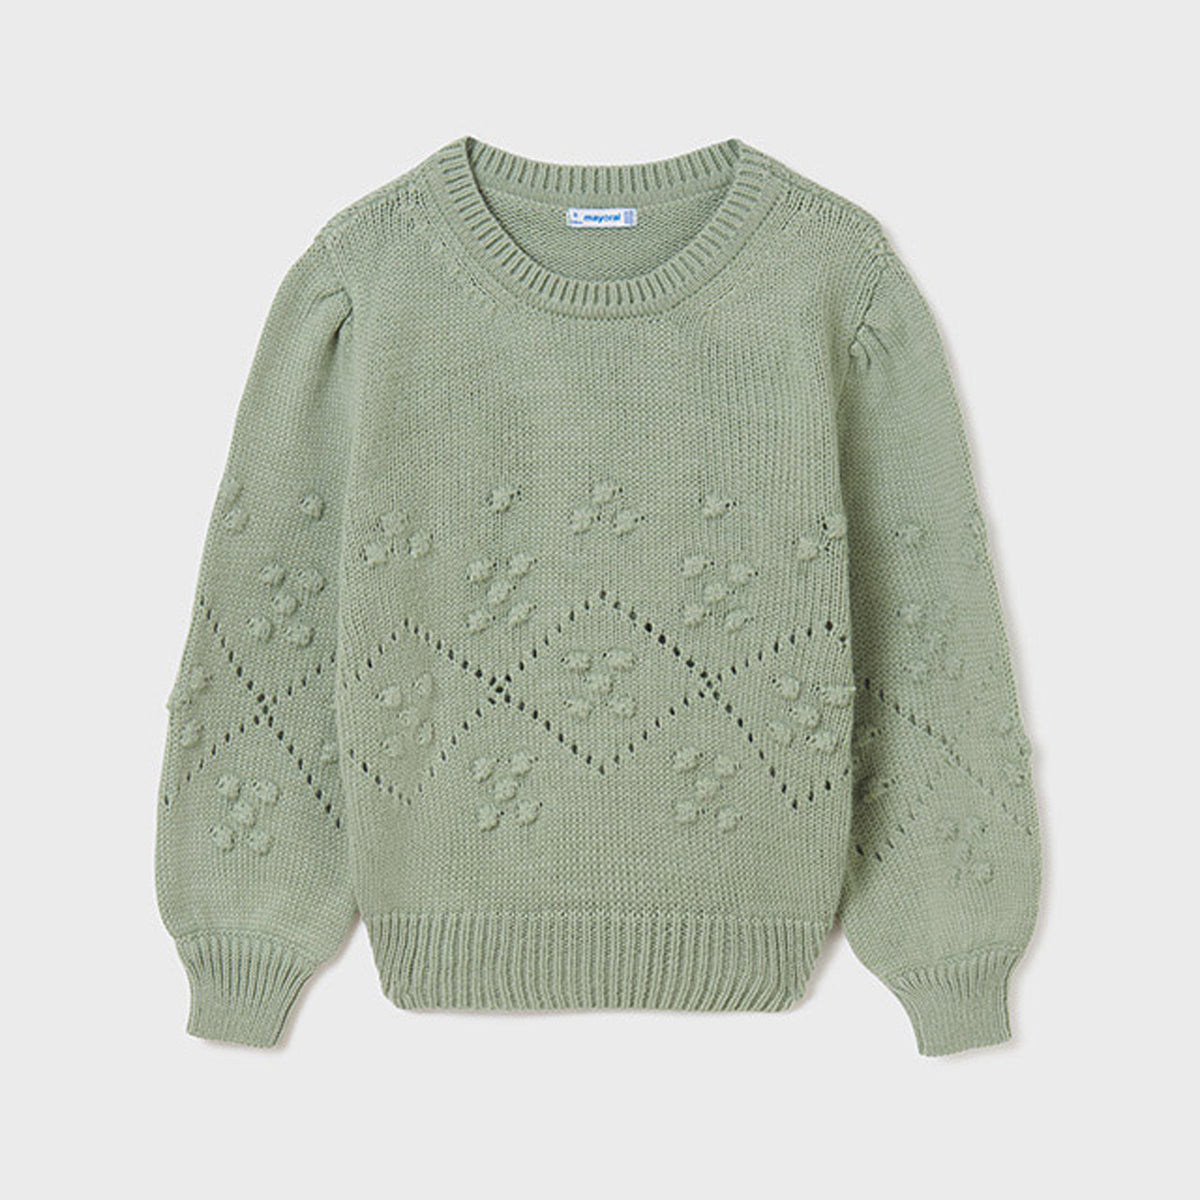 Sage Green Ecofriends Sweater With Pom Poms